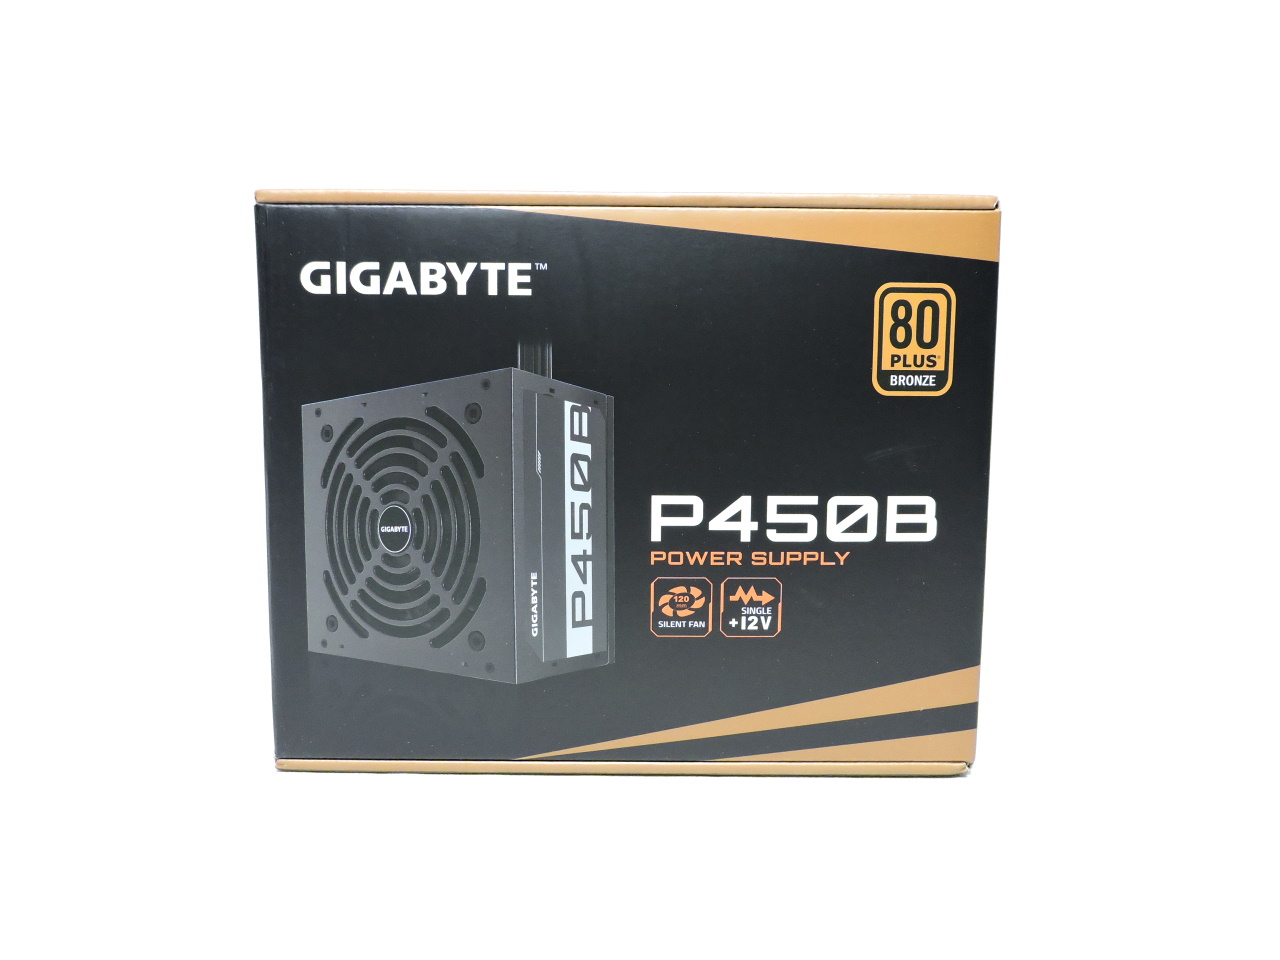 Gigabyte P450B Power Supply